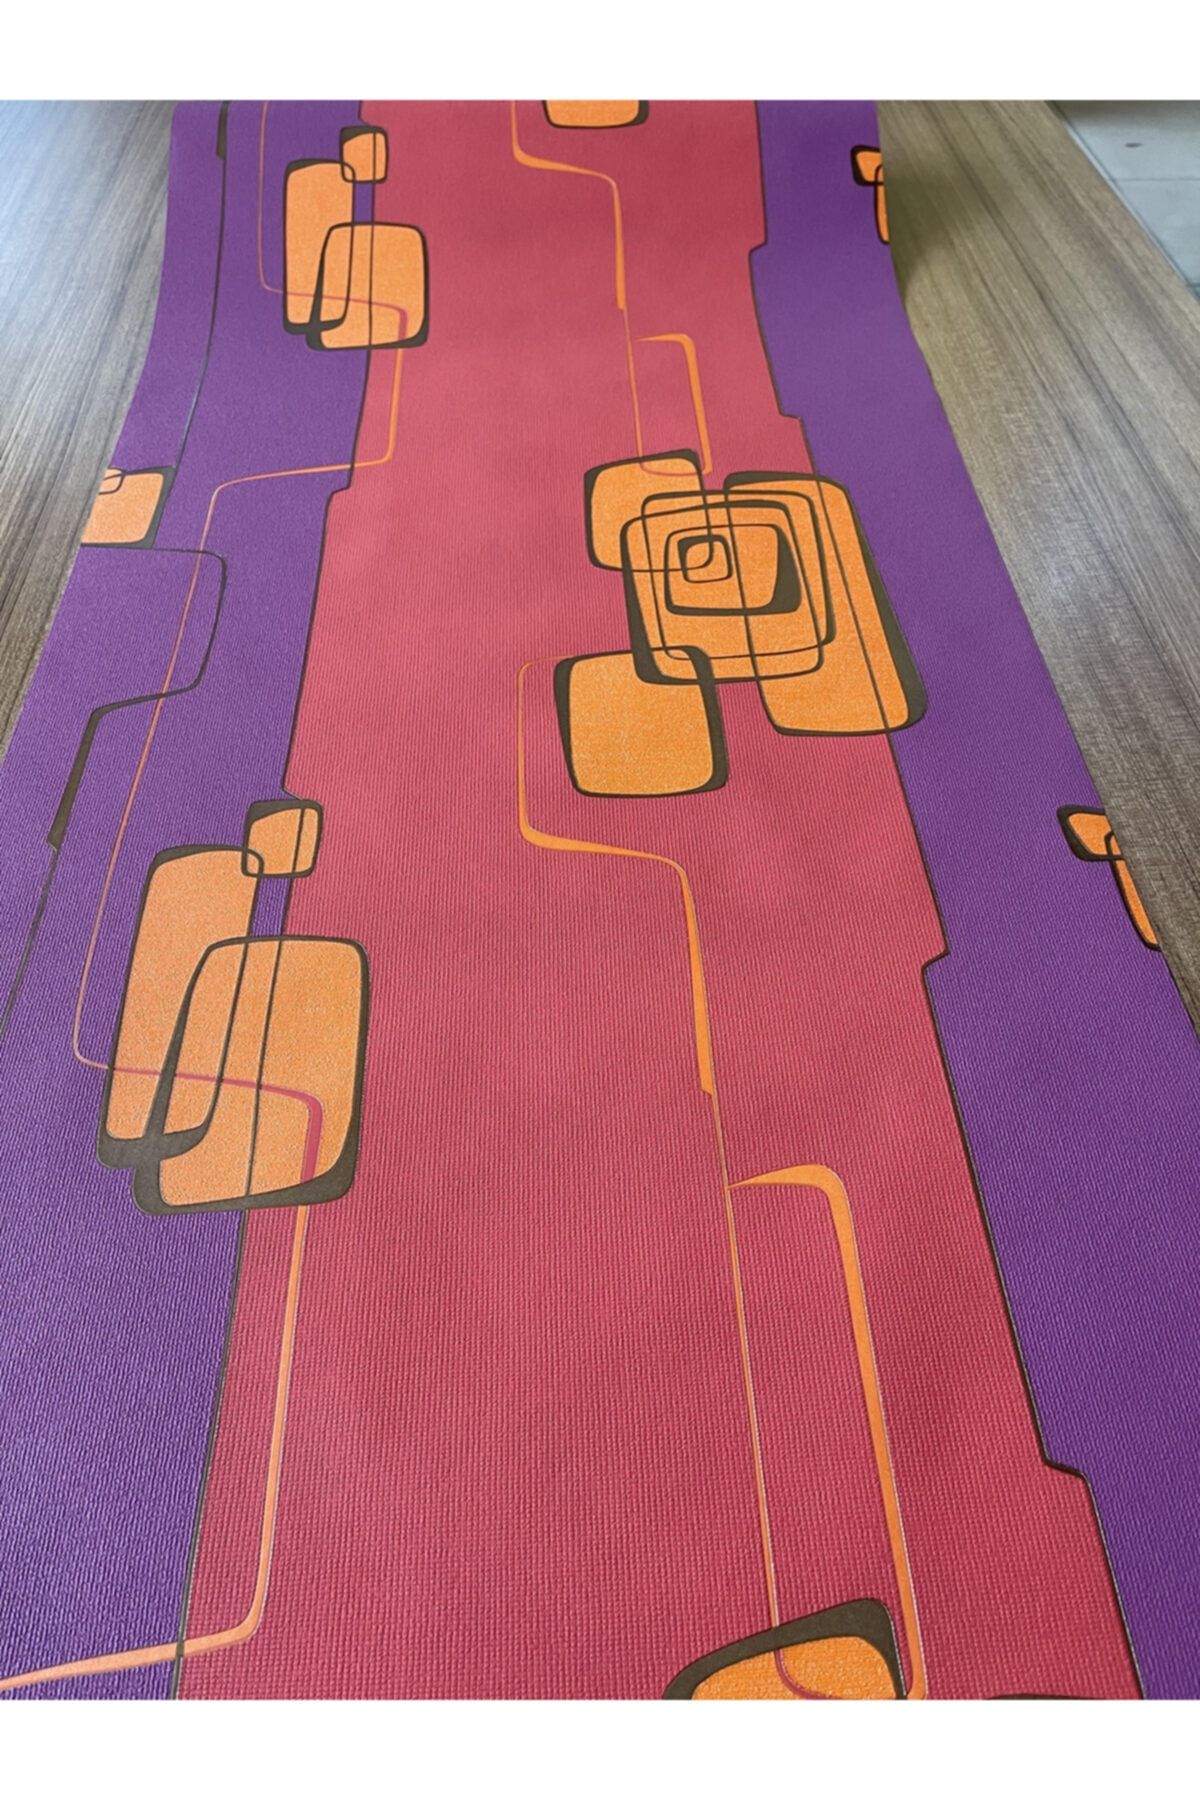 BAŞYAPI DİZAYN Renkli Geometrik Desenli Ithal Vinly Duvar Kağıdı (5m²)